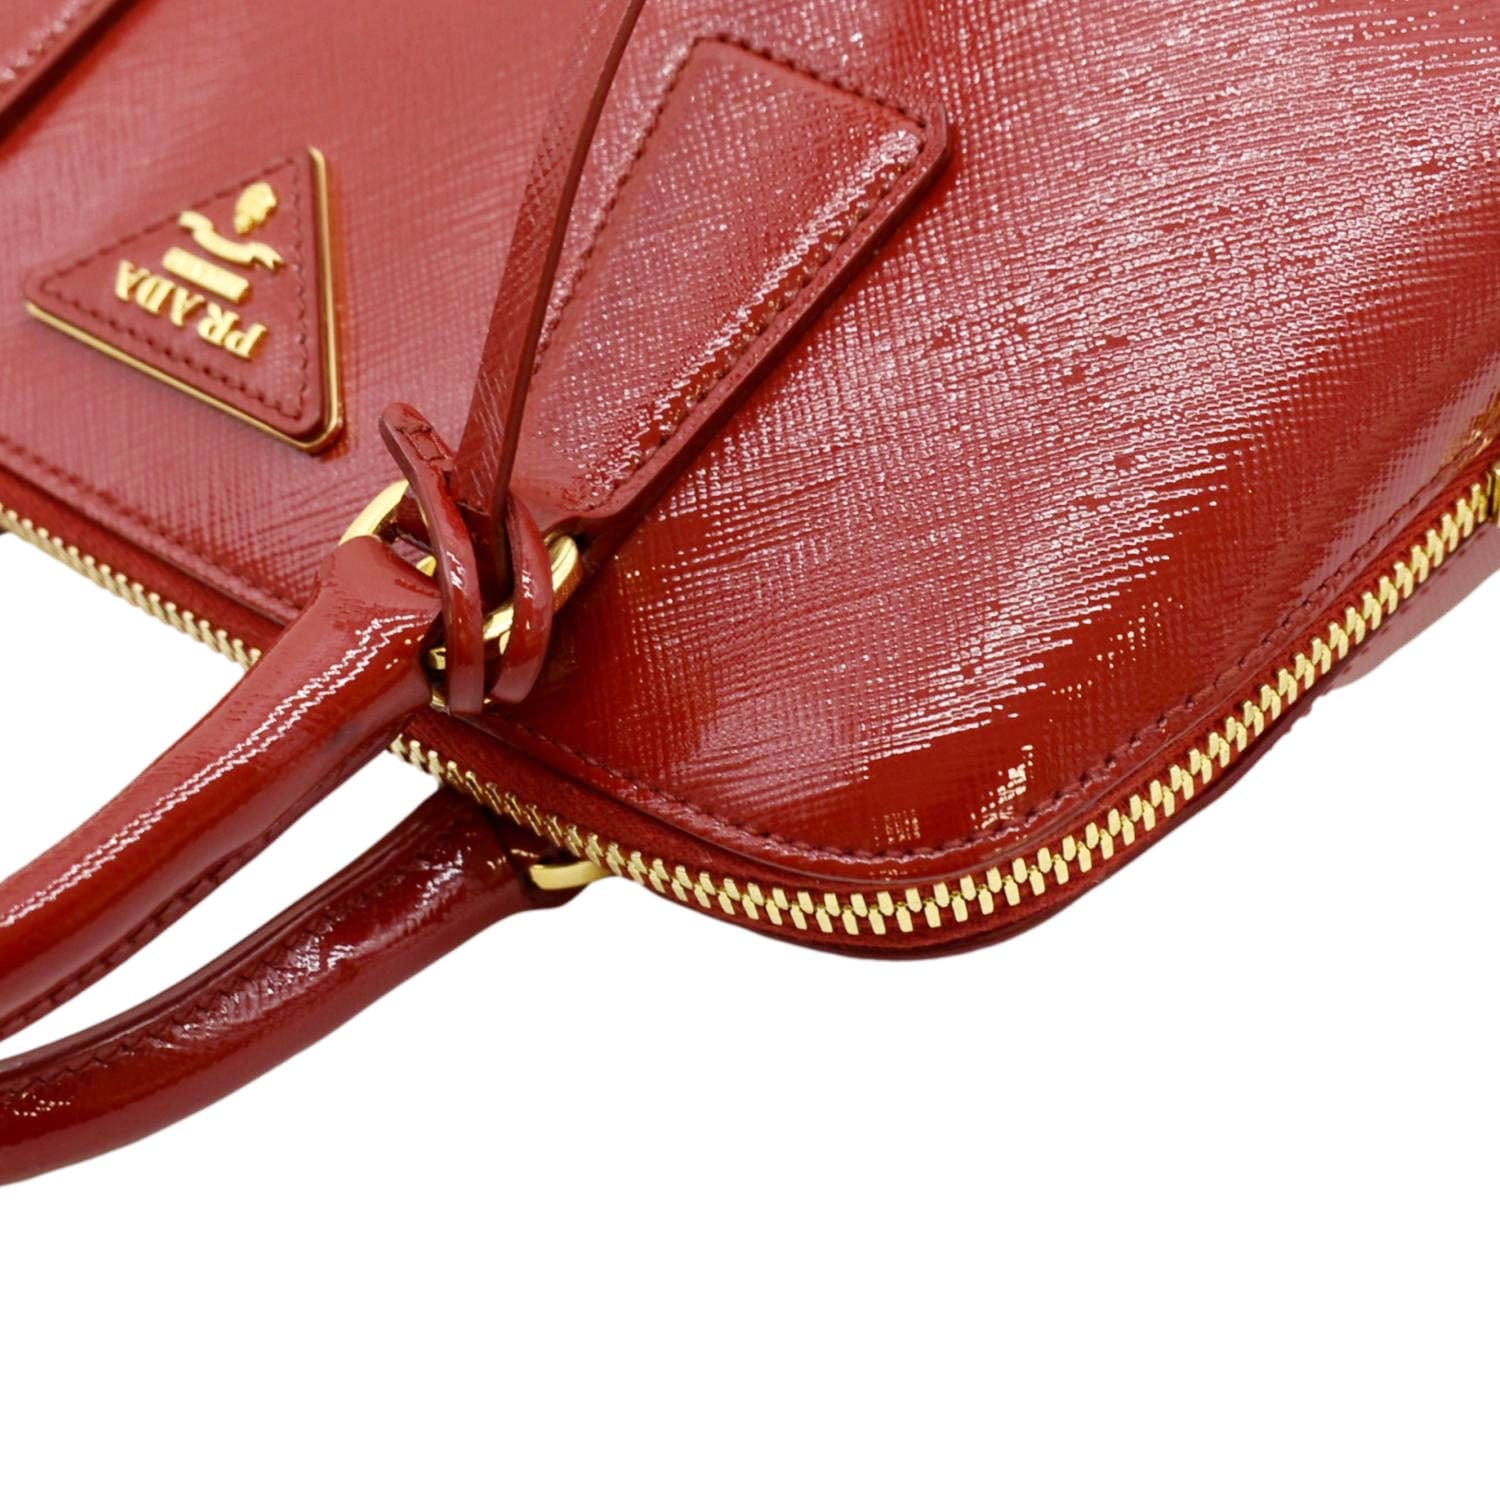 Prada Promenade Bag Vernice Saffiano Leather Medium Red 64445640